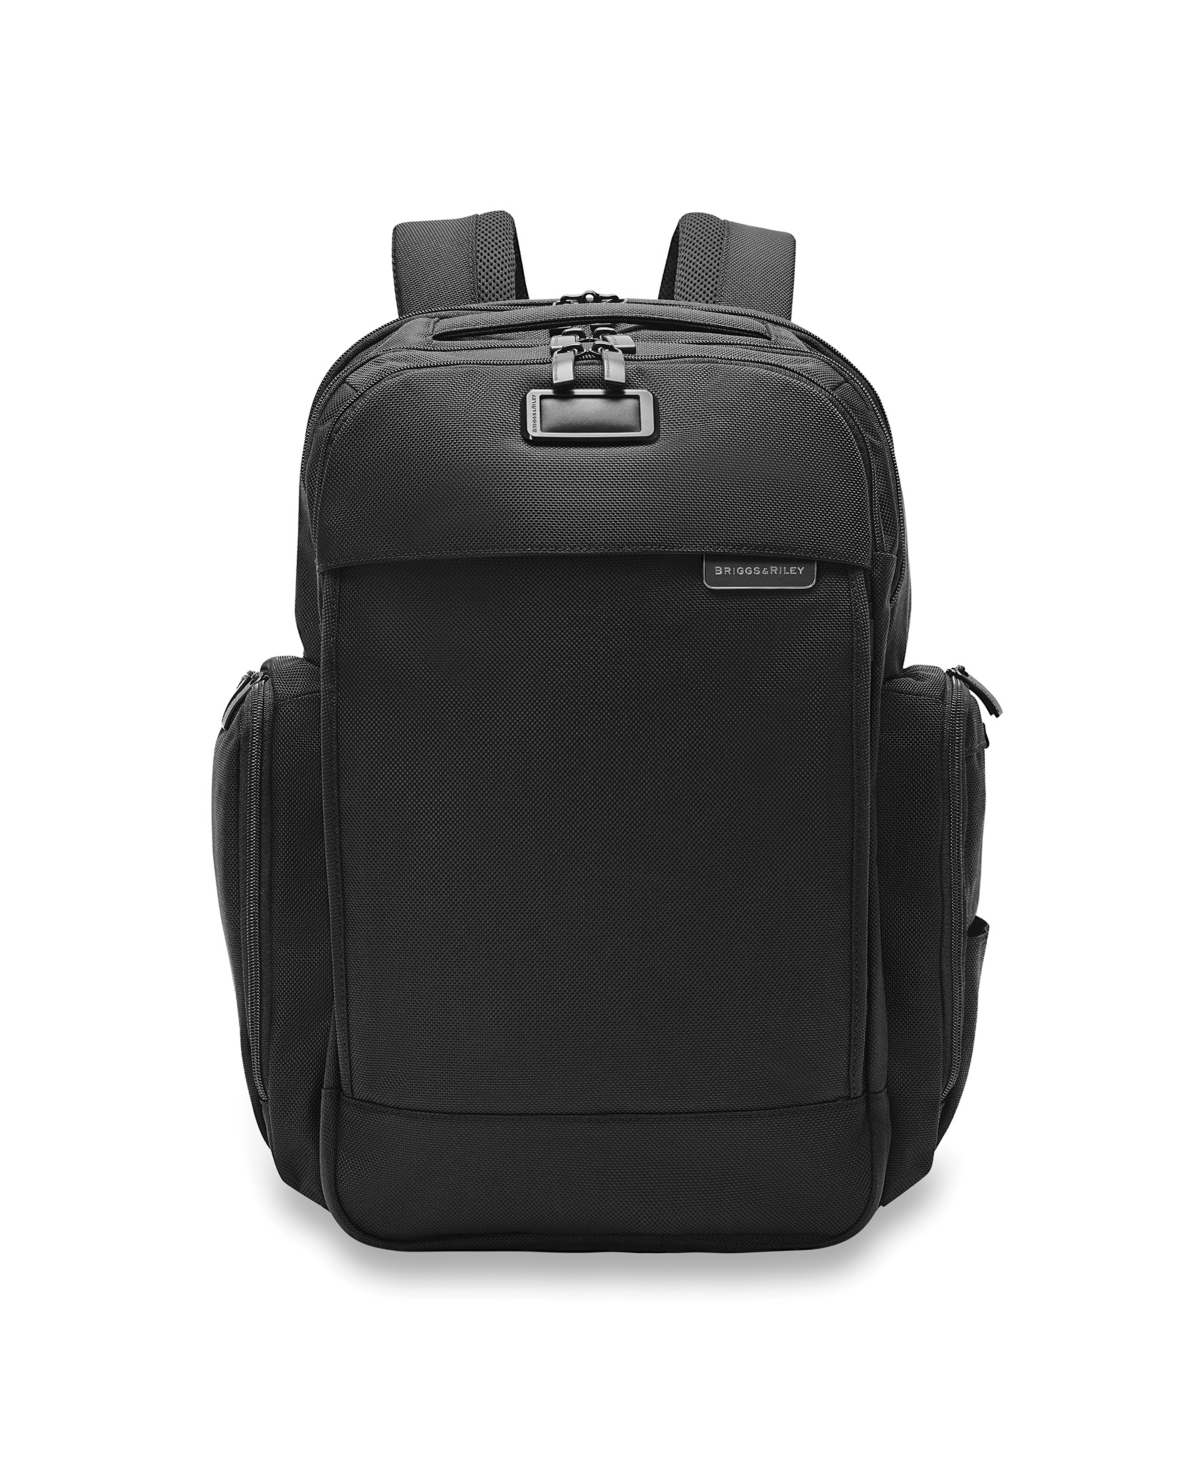 Baseline Traveler Backpack - Black